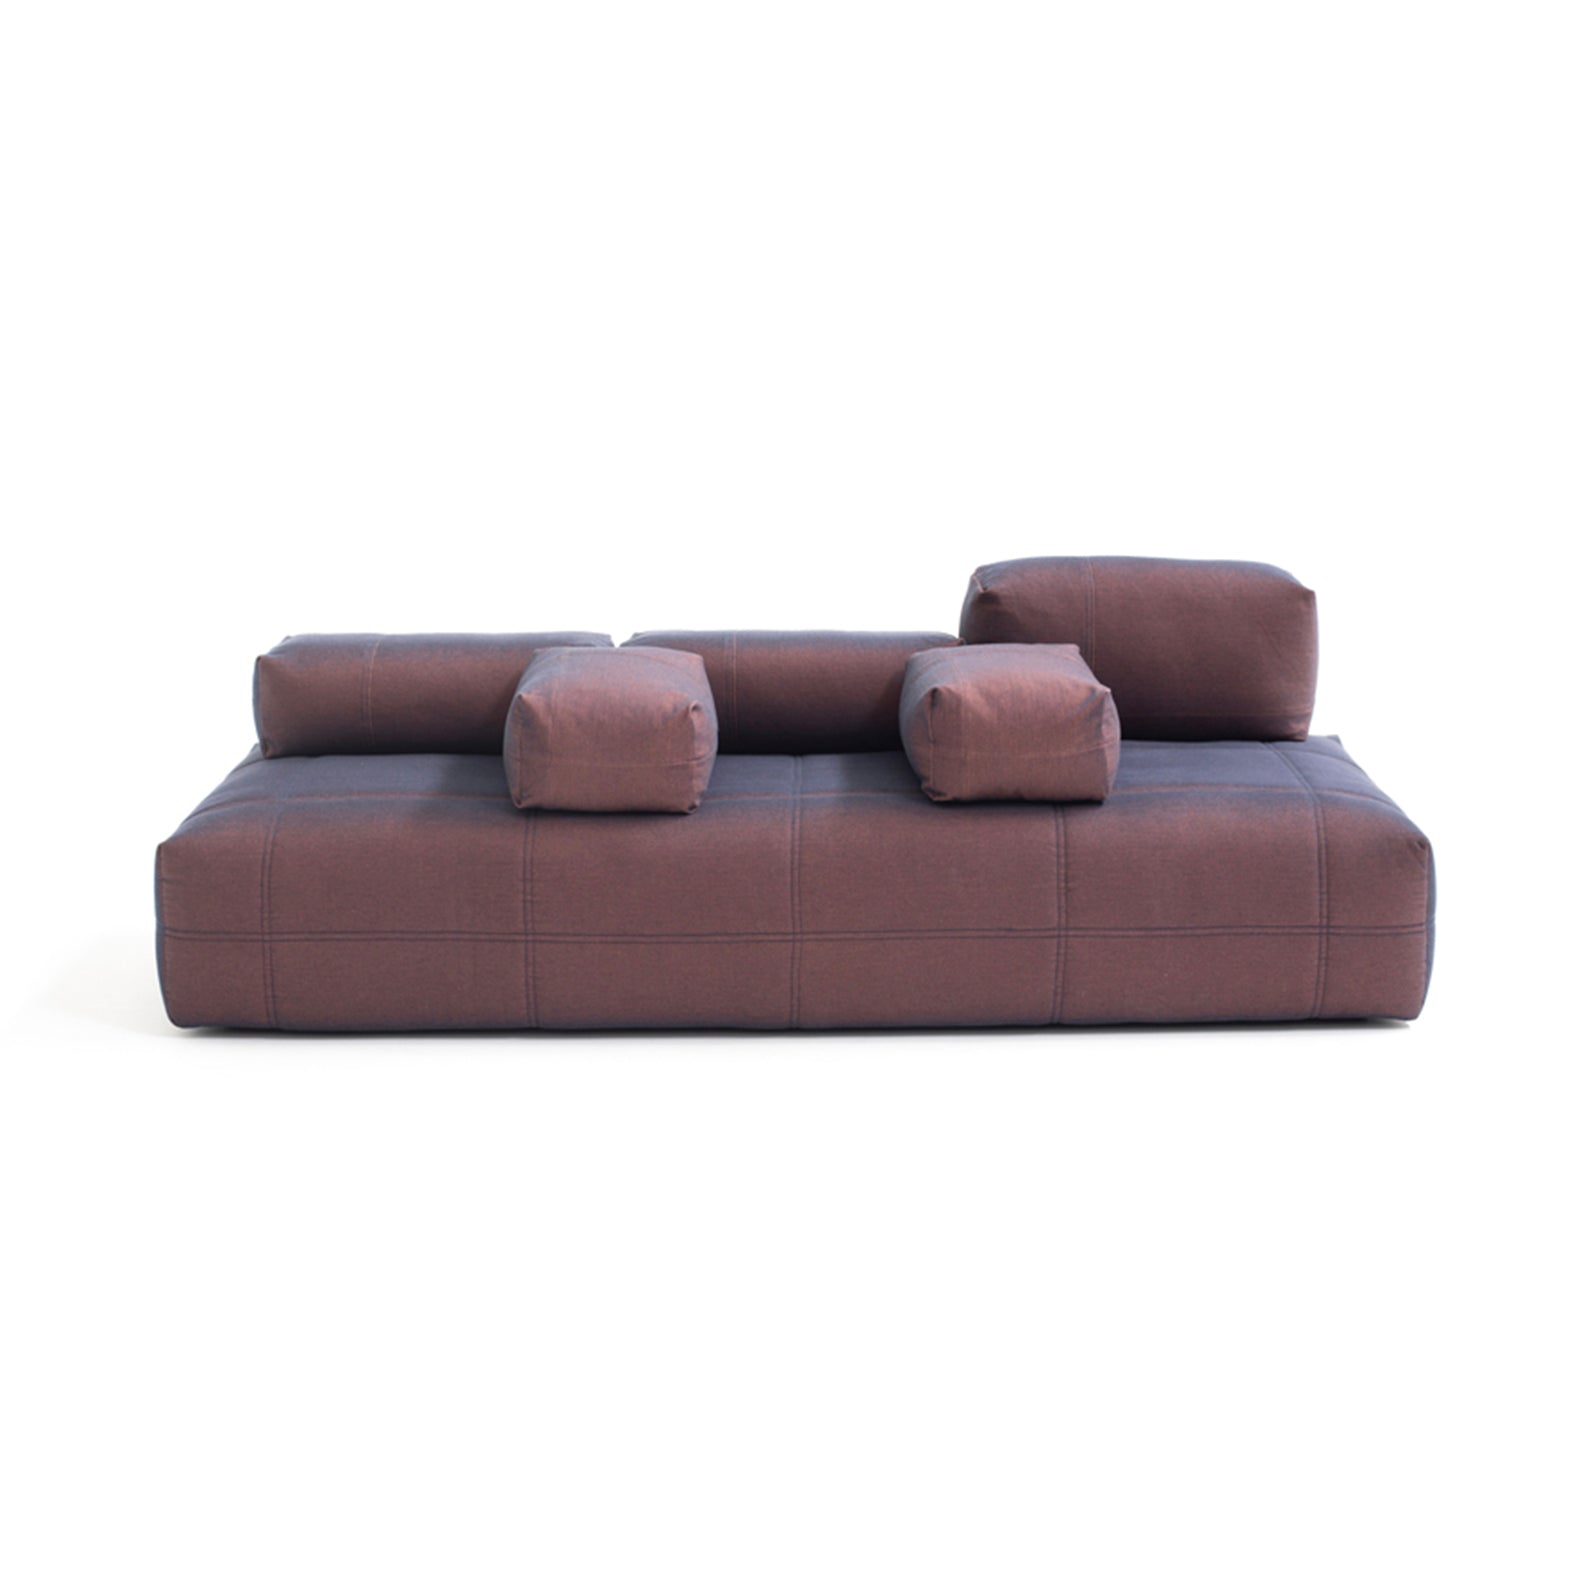 AeroZeppelin Sofa with cushions